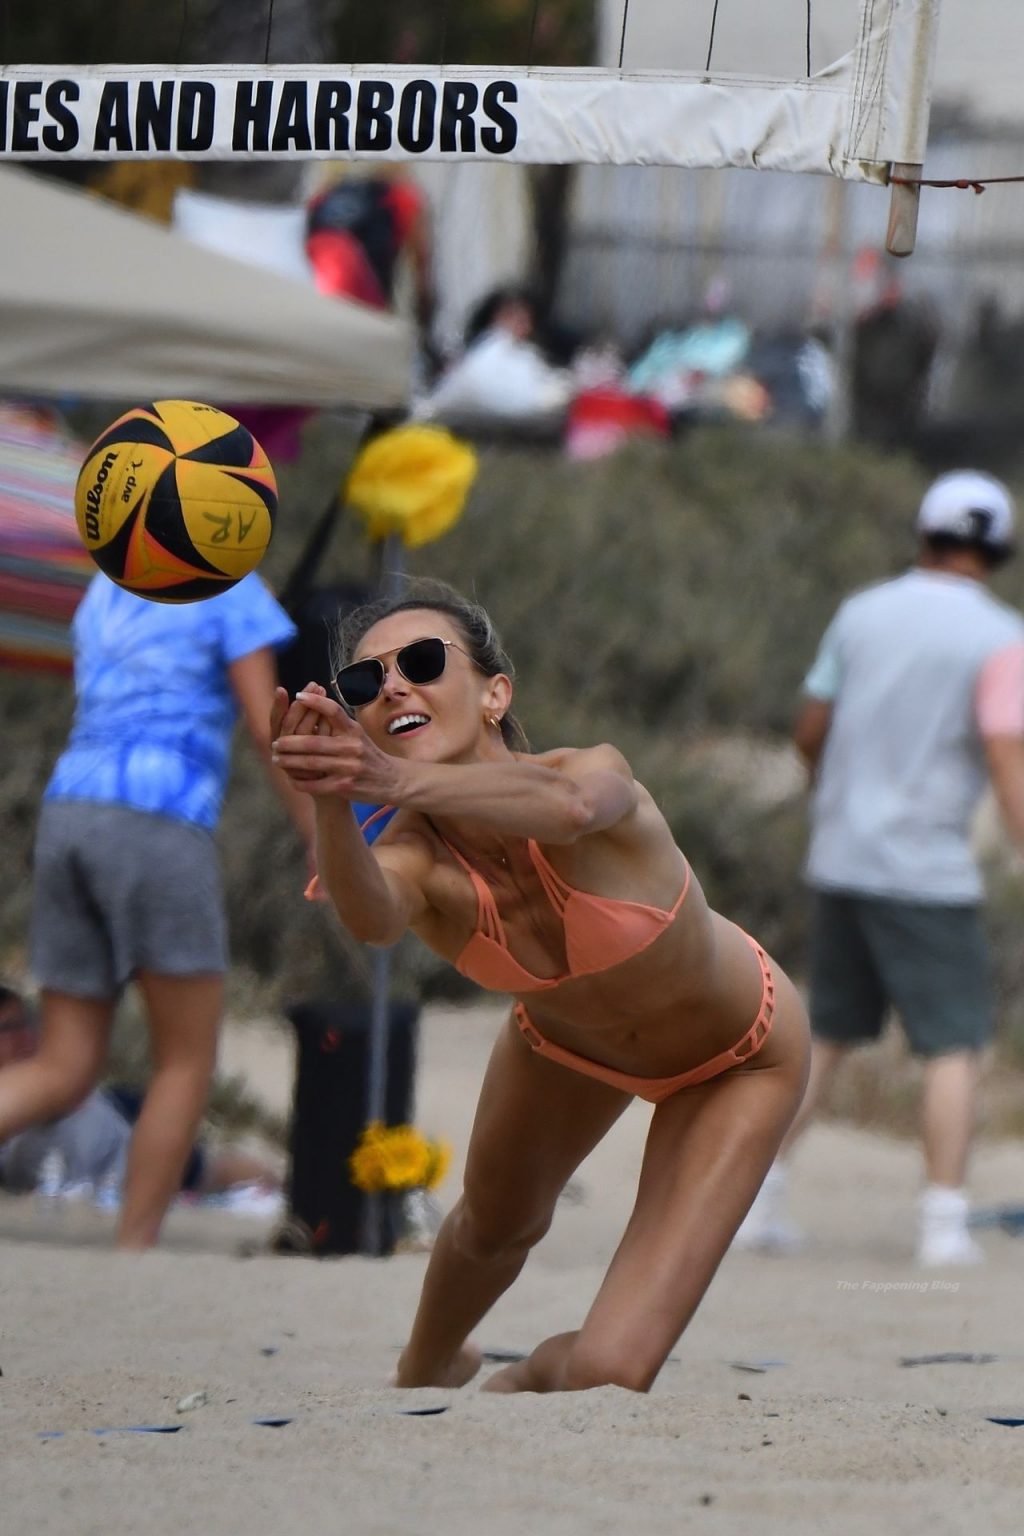 Ludi Delfino Displays Her Amazing Bikini Body in Santa Monica (39 Photos)